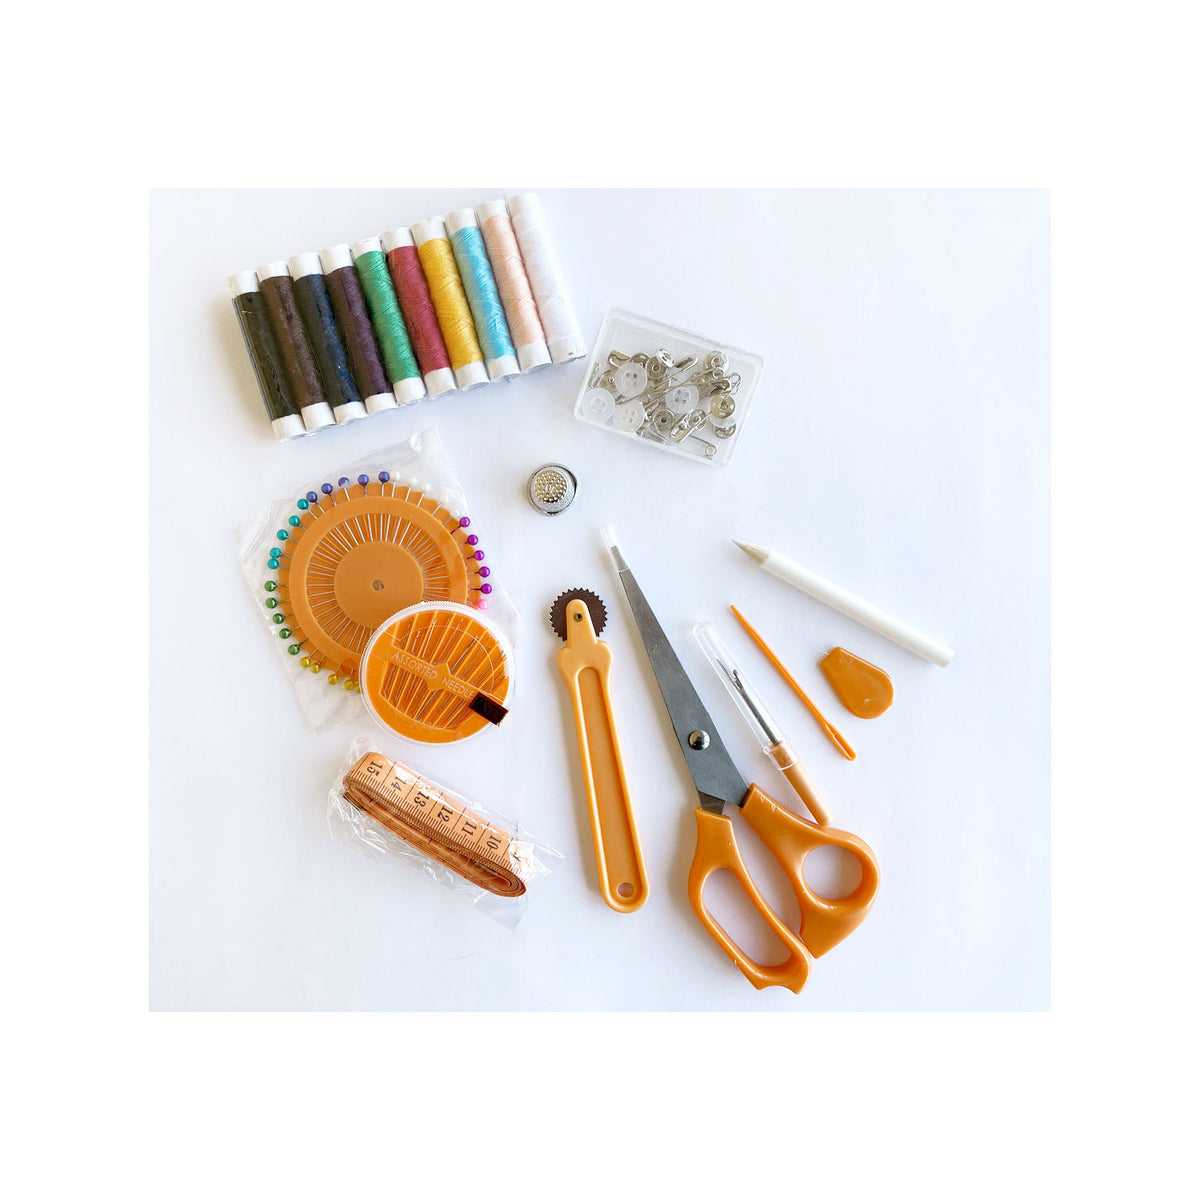 Kit de costura - Cose tu propio estuche para lápices